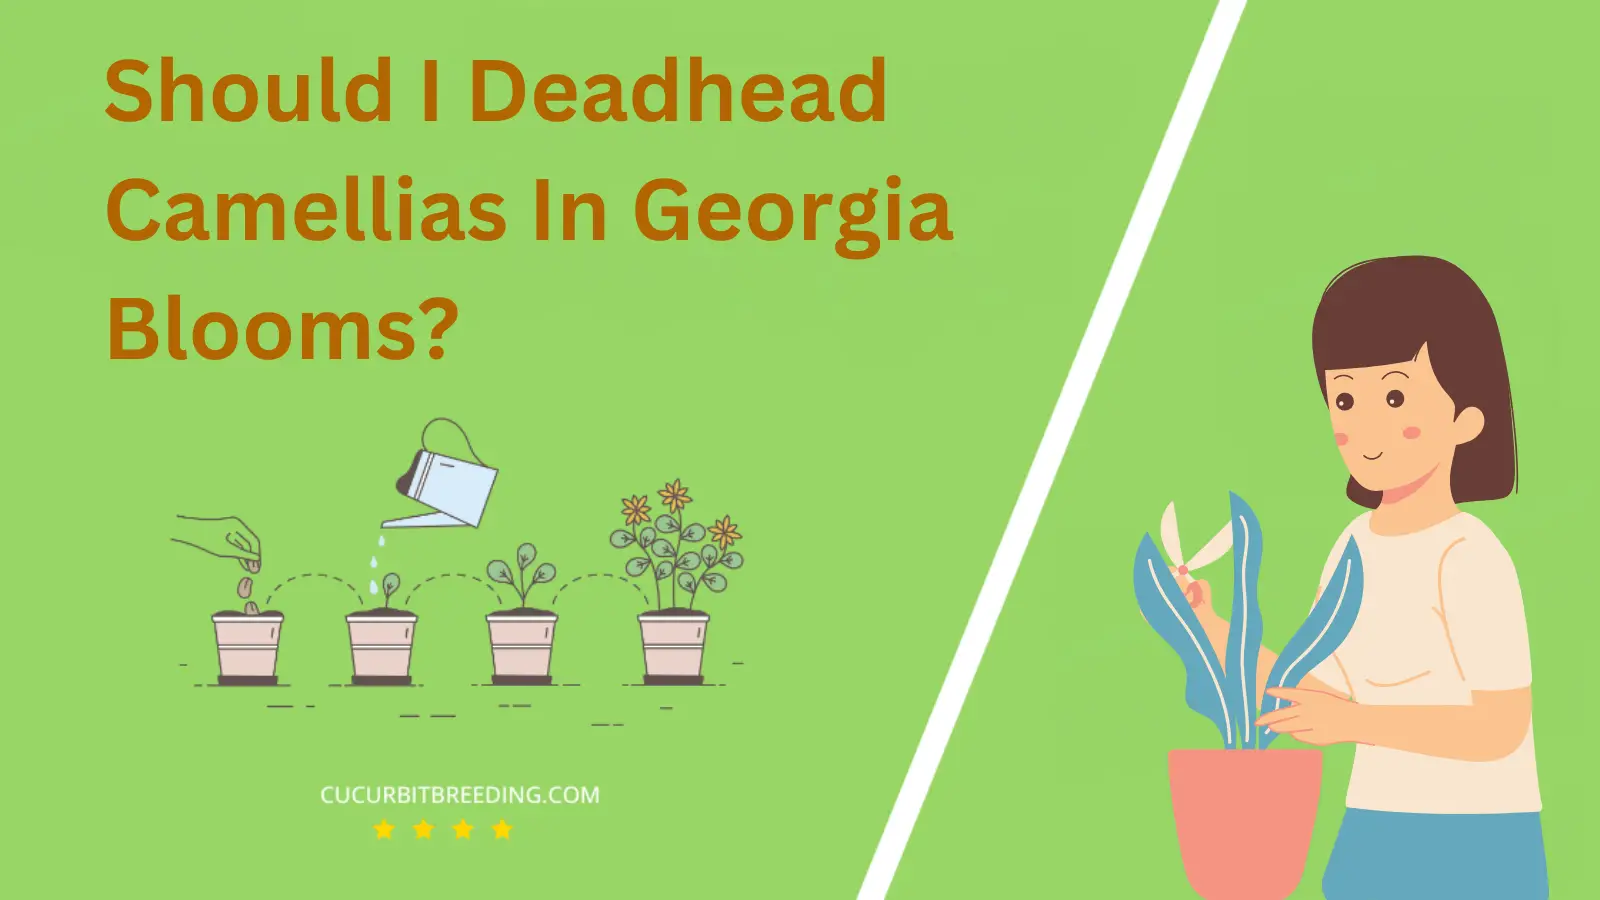 Should I Deadhead Camellias In Georgia Blooms?